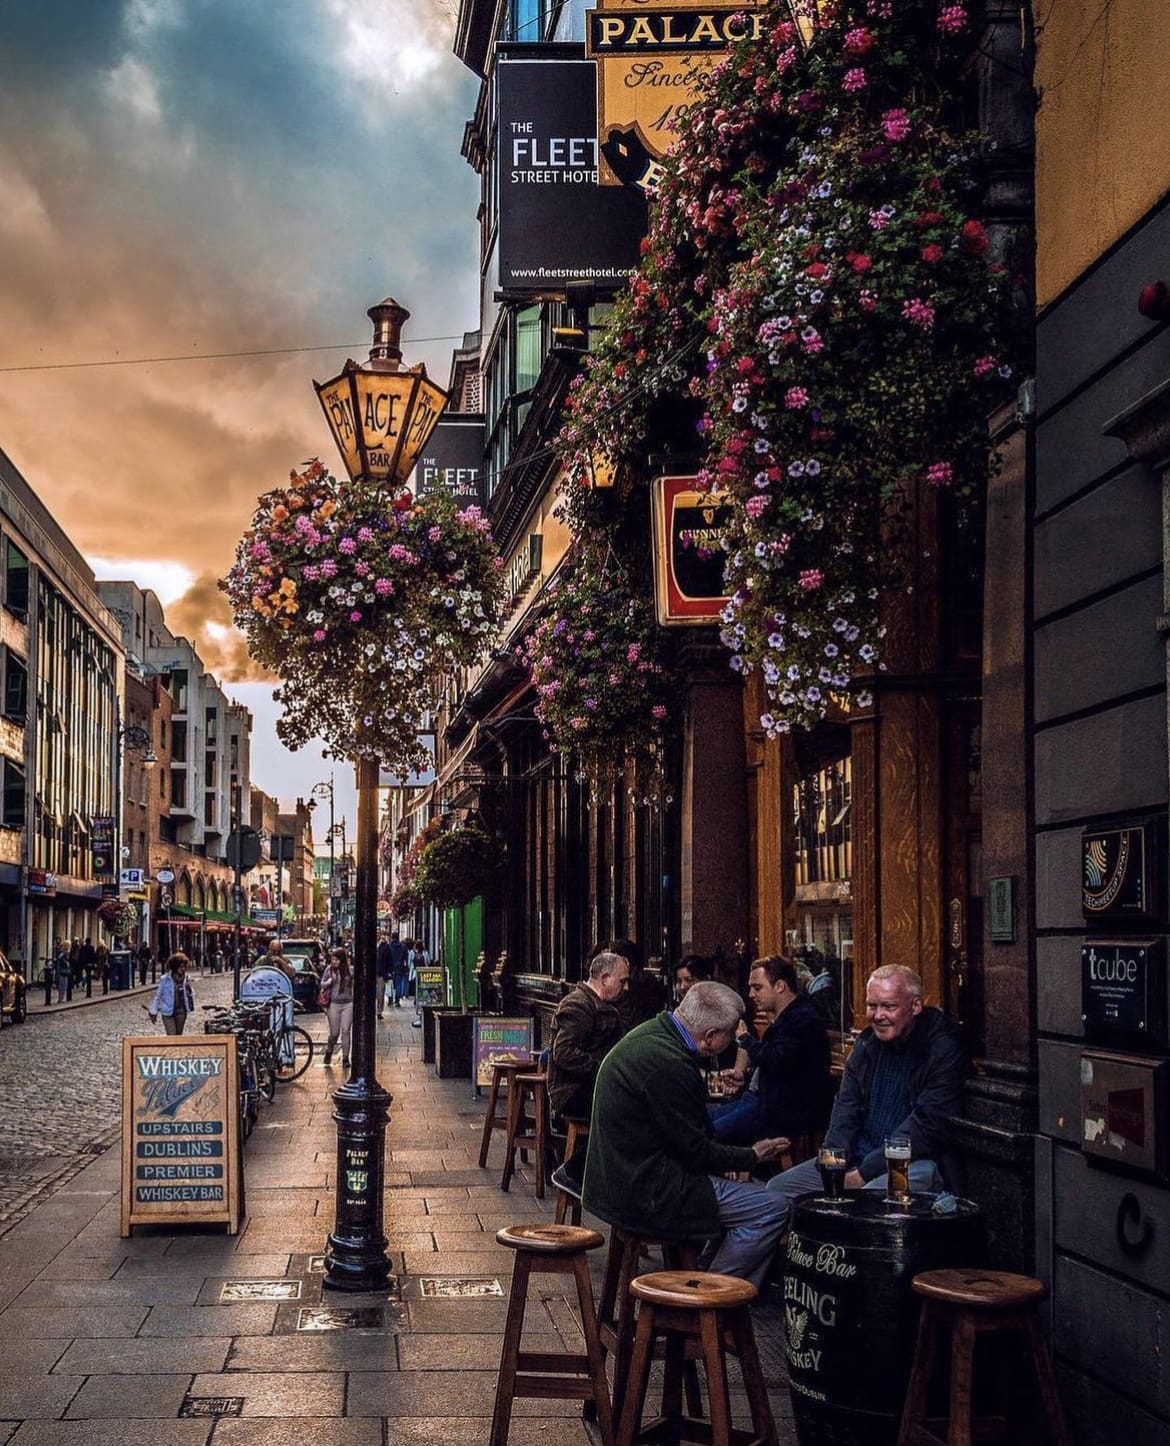 City scenes in Ireland